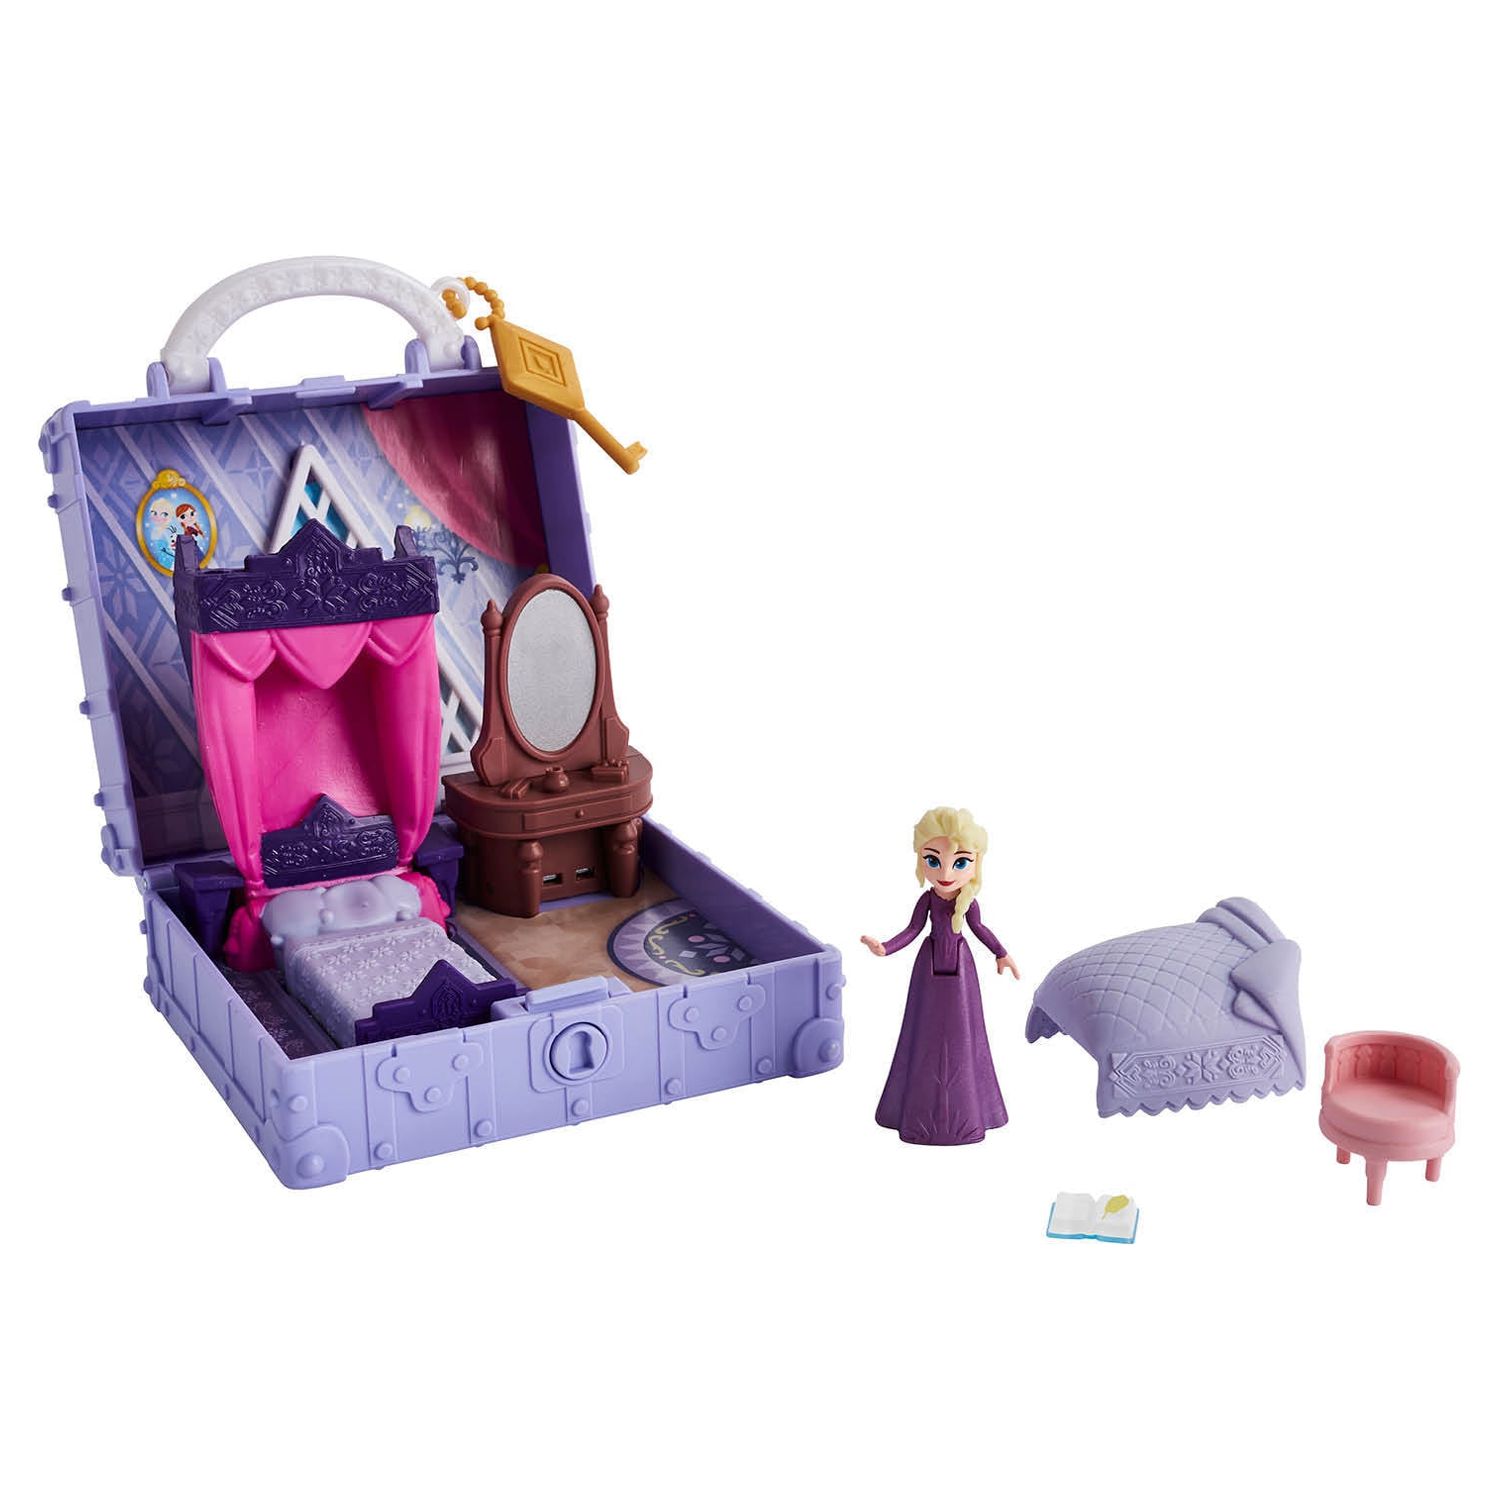 Disney Frozen 2 Portable Pop-up Elsa's Bedroom Playset, Includes Elsa Doll - image 1 of 10